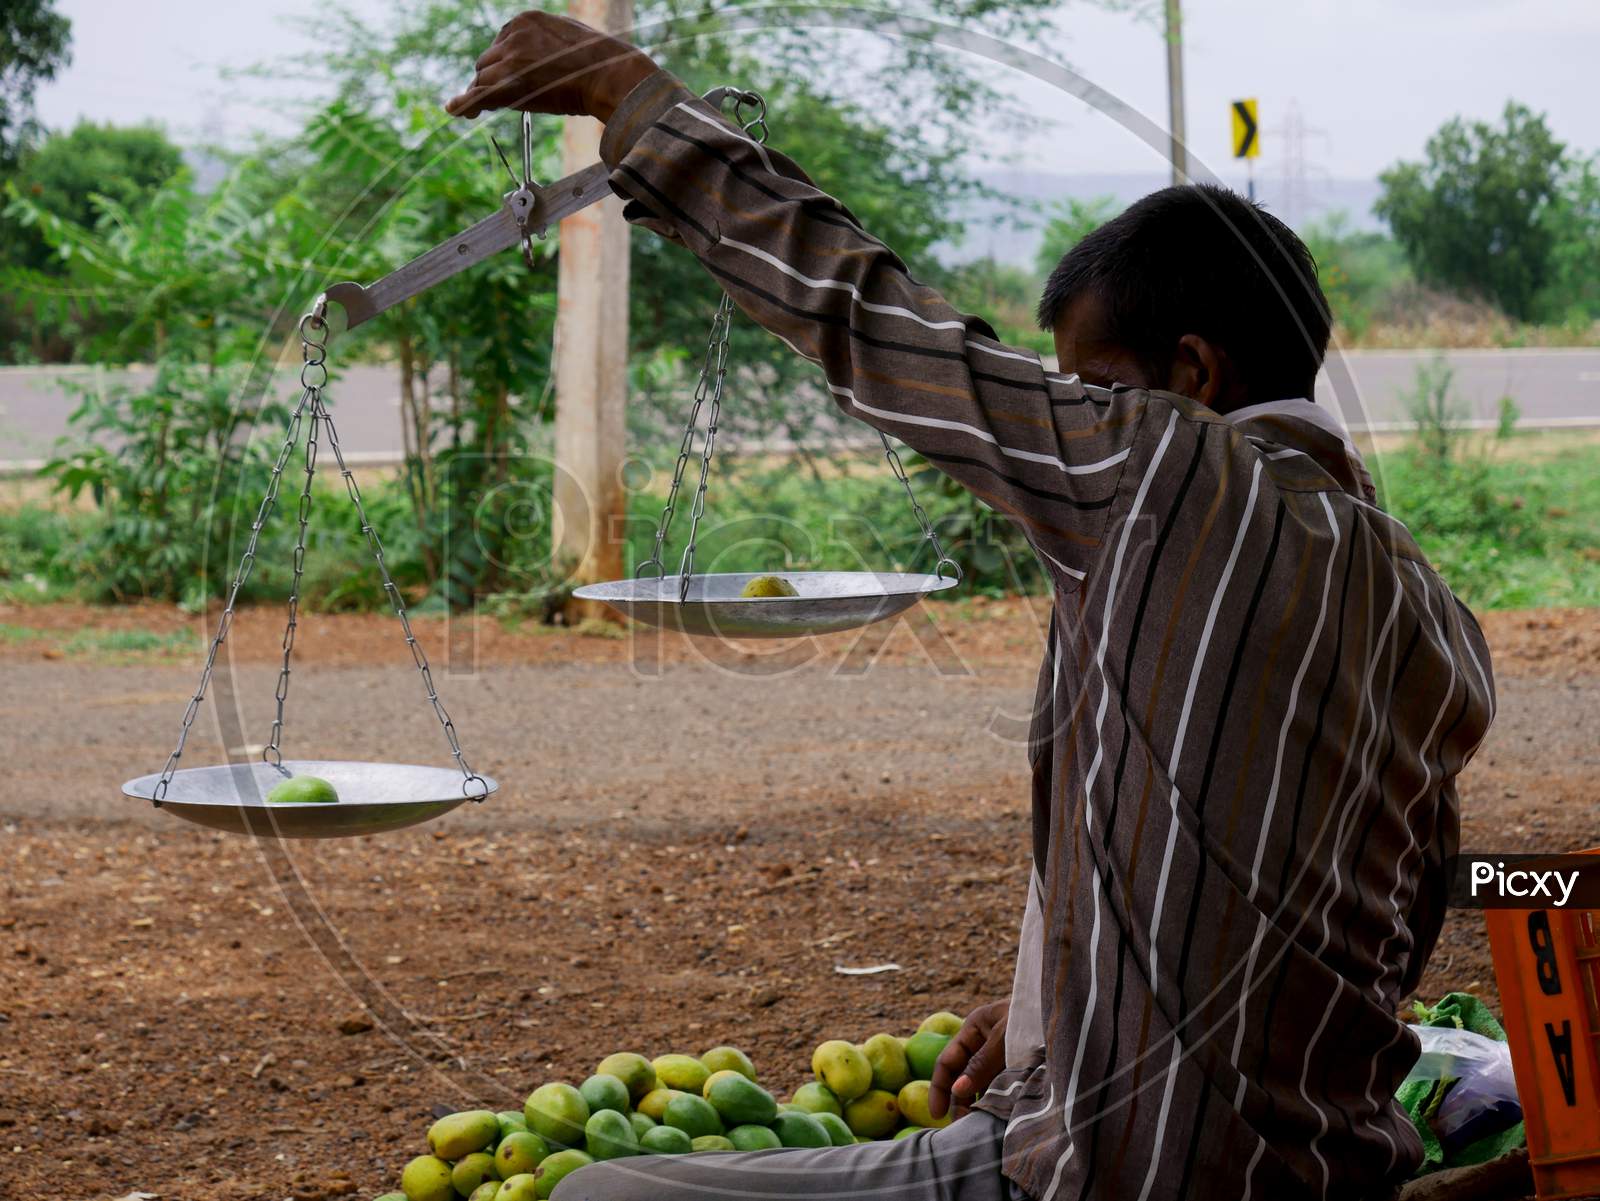 Street Fruit Seller Weight Measuring Of Fresh Organic Mango On Hand.